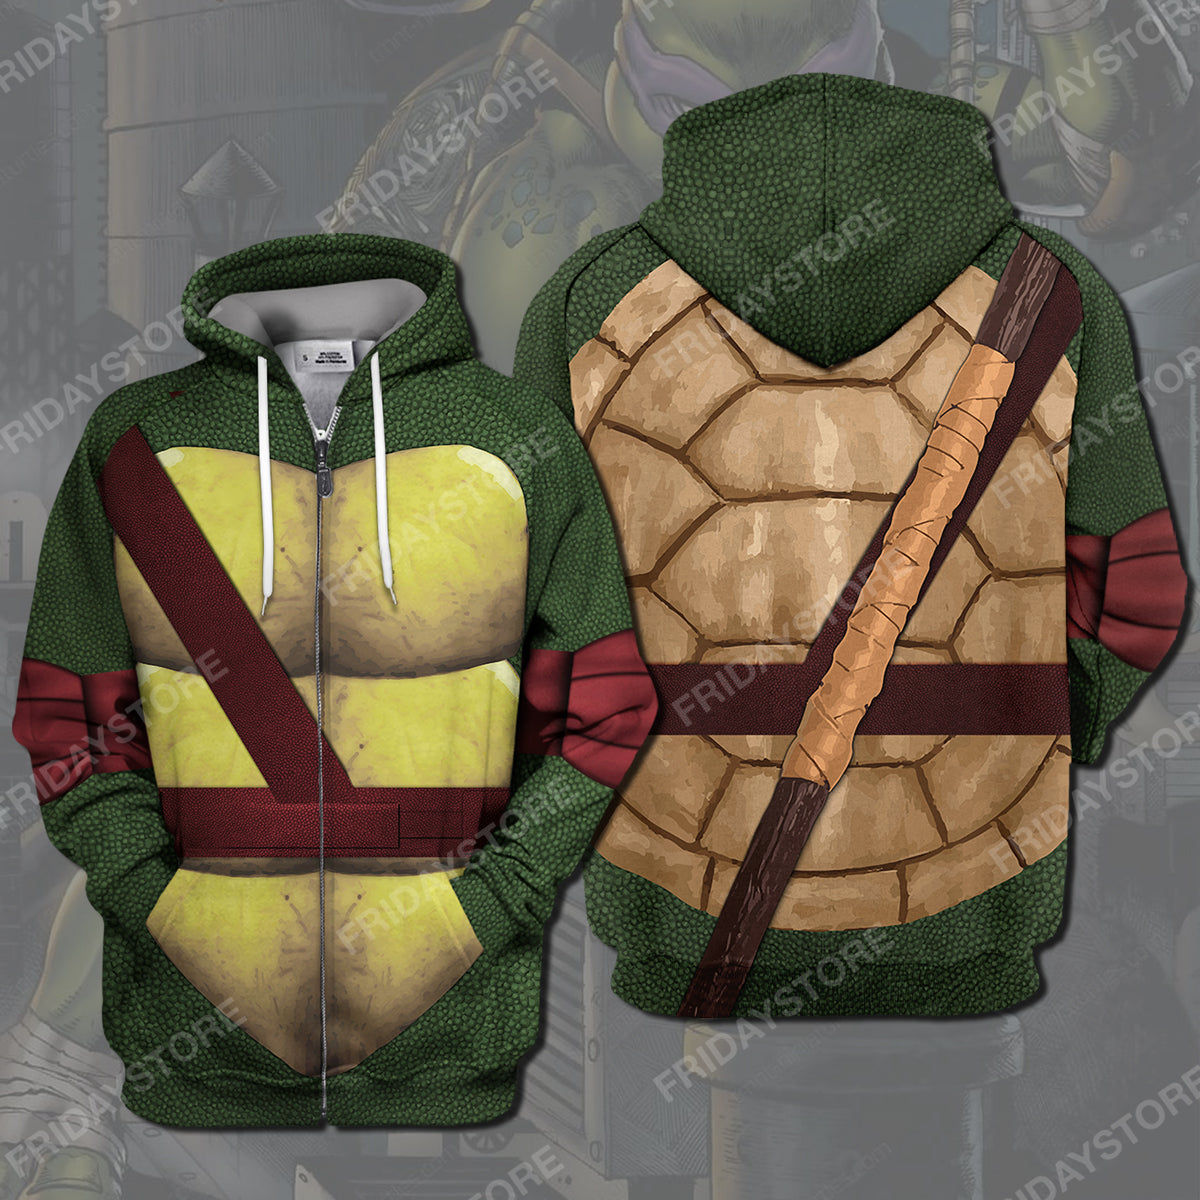 Unifinz TMTN Hoodie Dona Ninja Turtles Costume T-shirt TMNT Shirt Sweater Tank Cool TMNT Cosplay Costume Apparel 2026